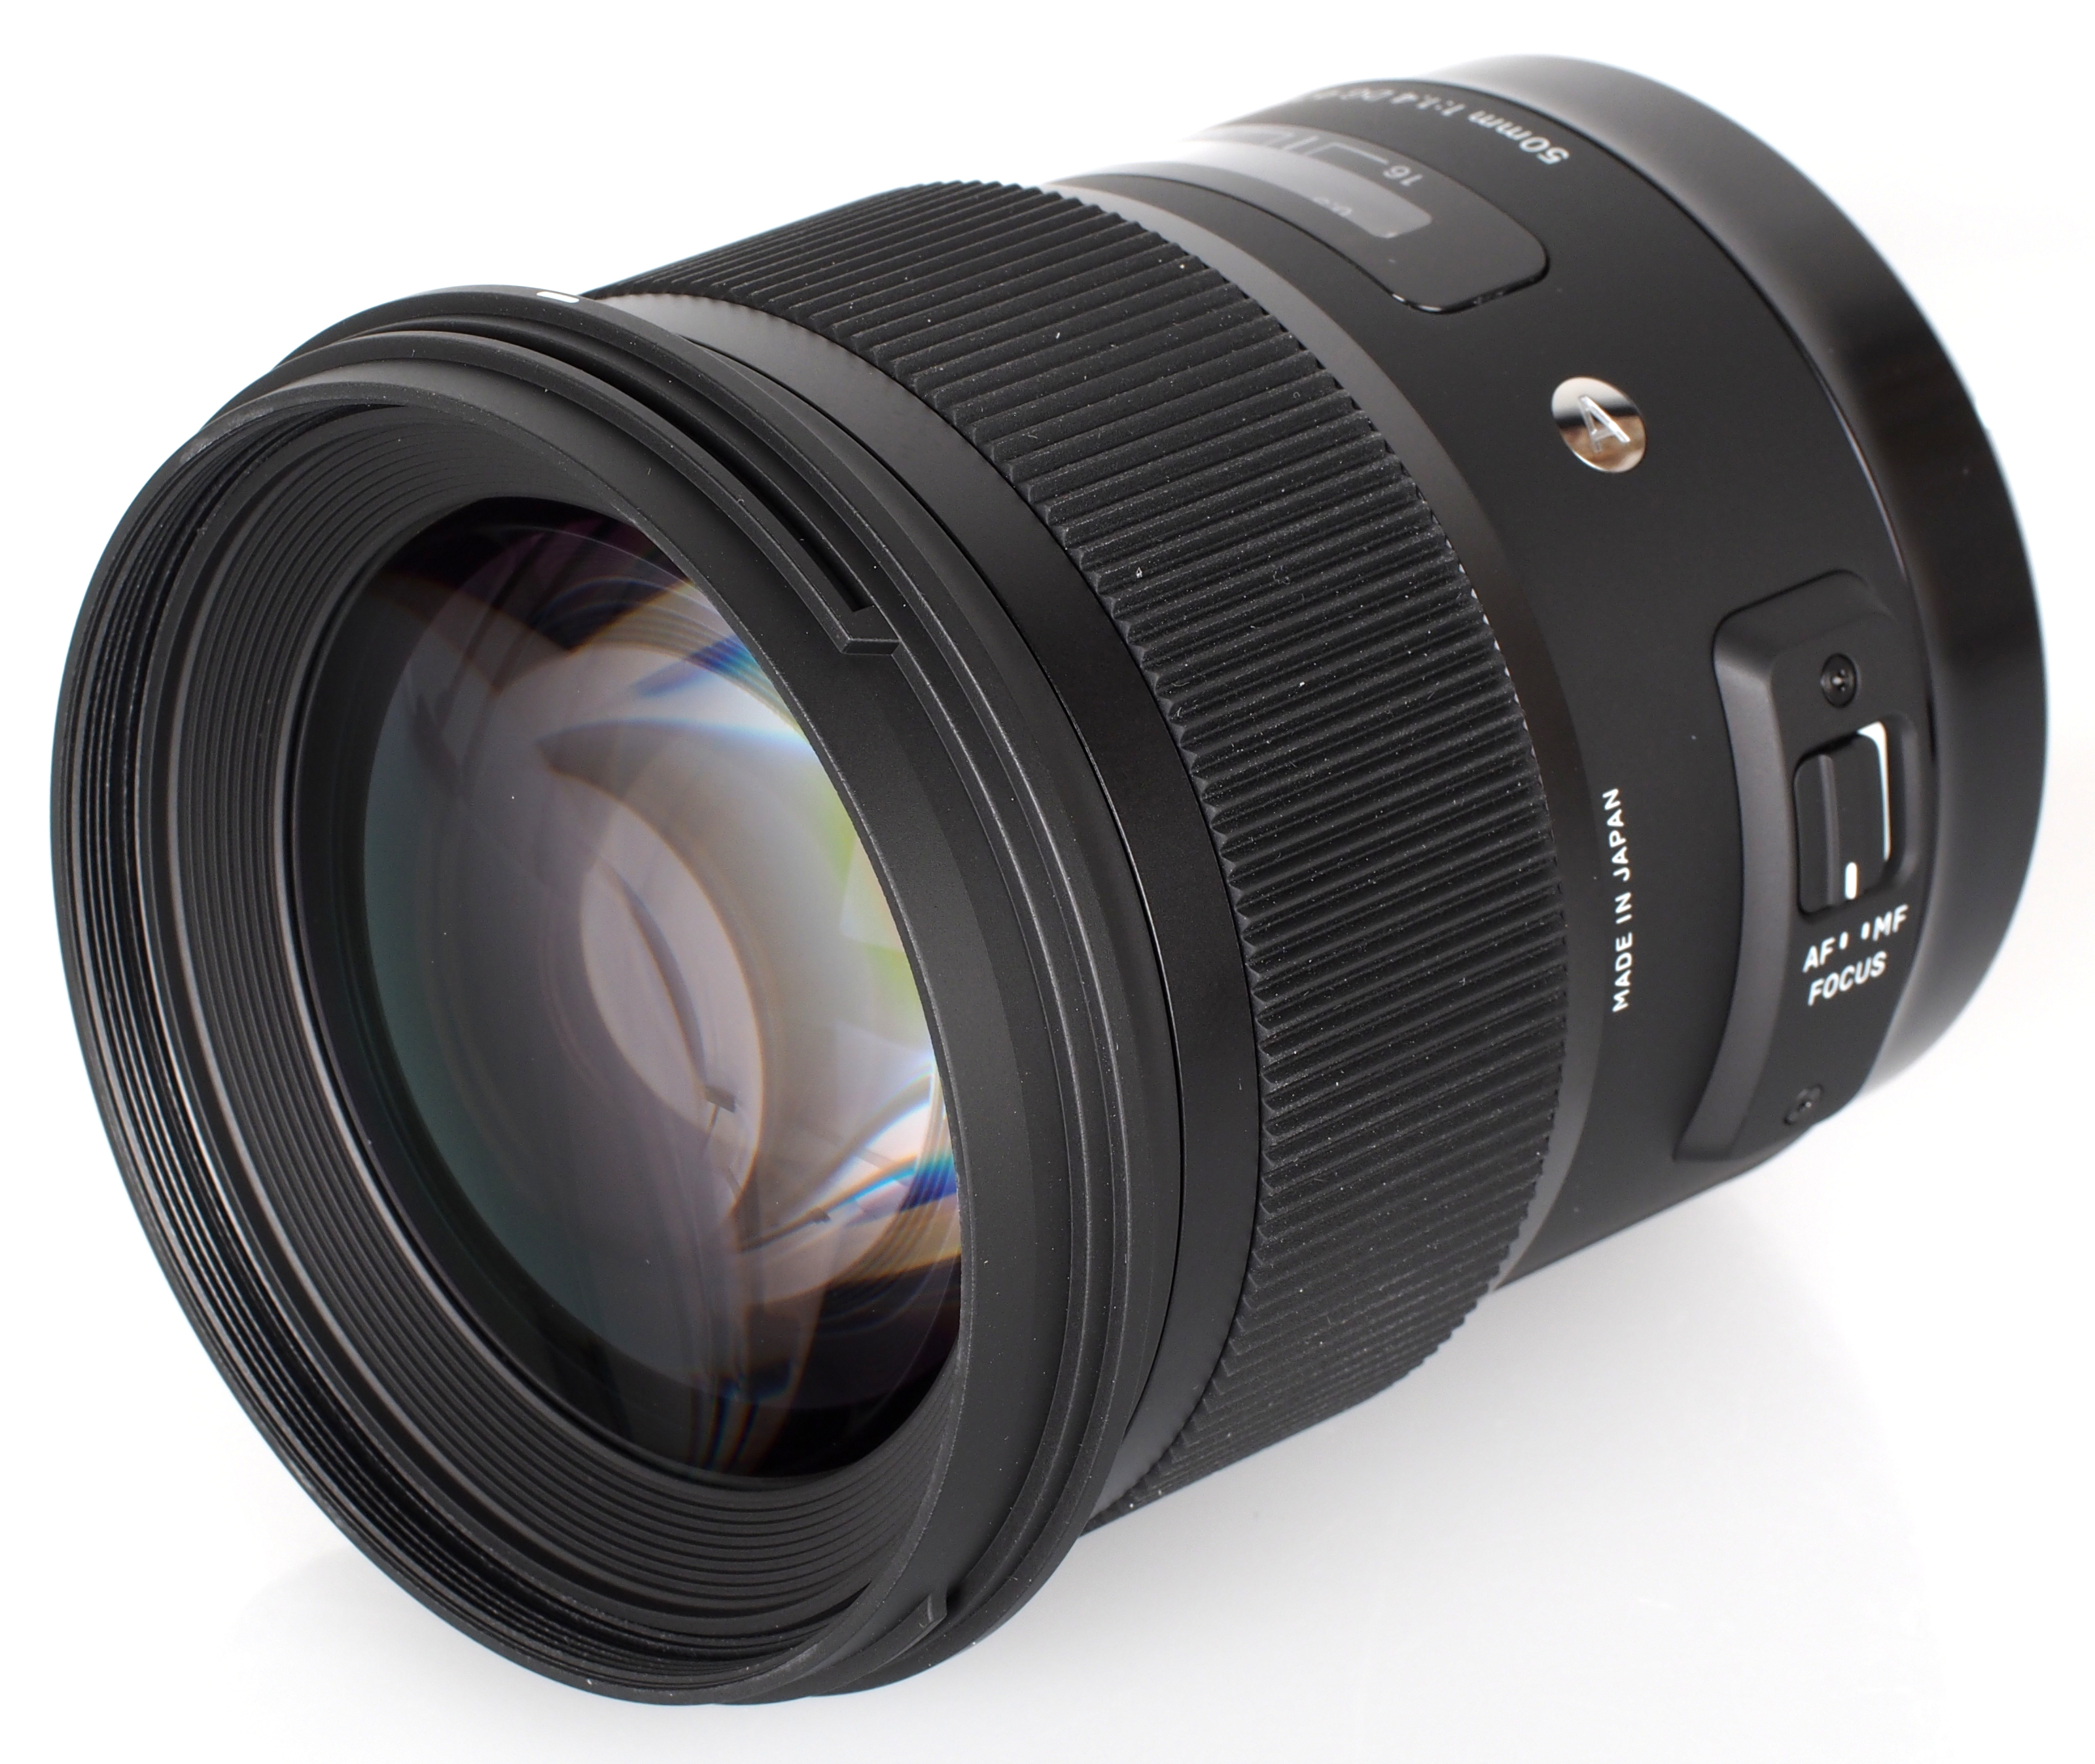 Sigma 50mm F1.4 DG HSM Art Lens Test